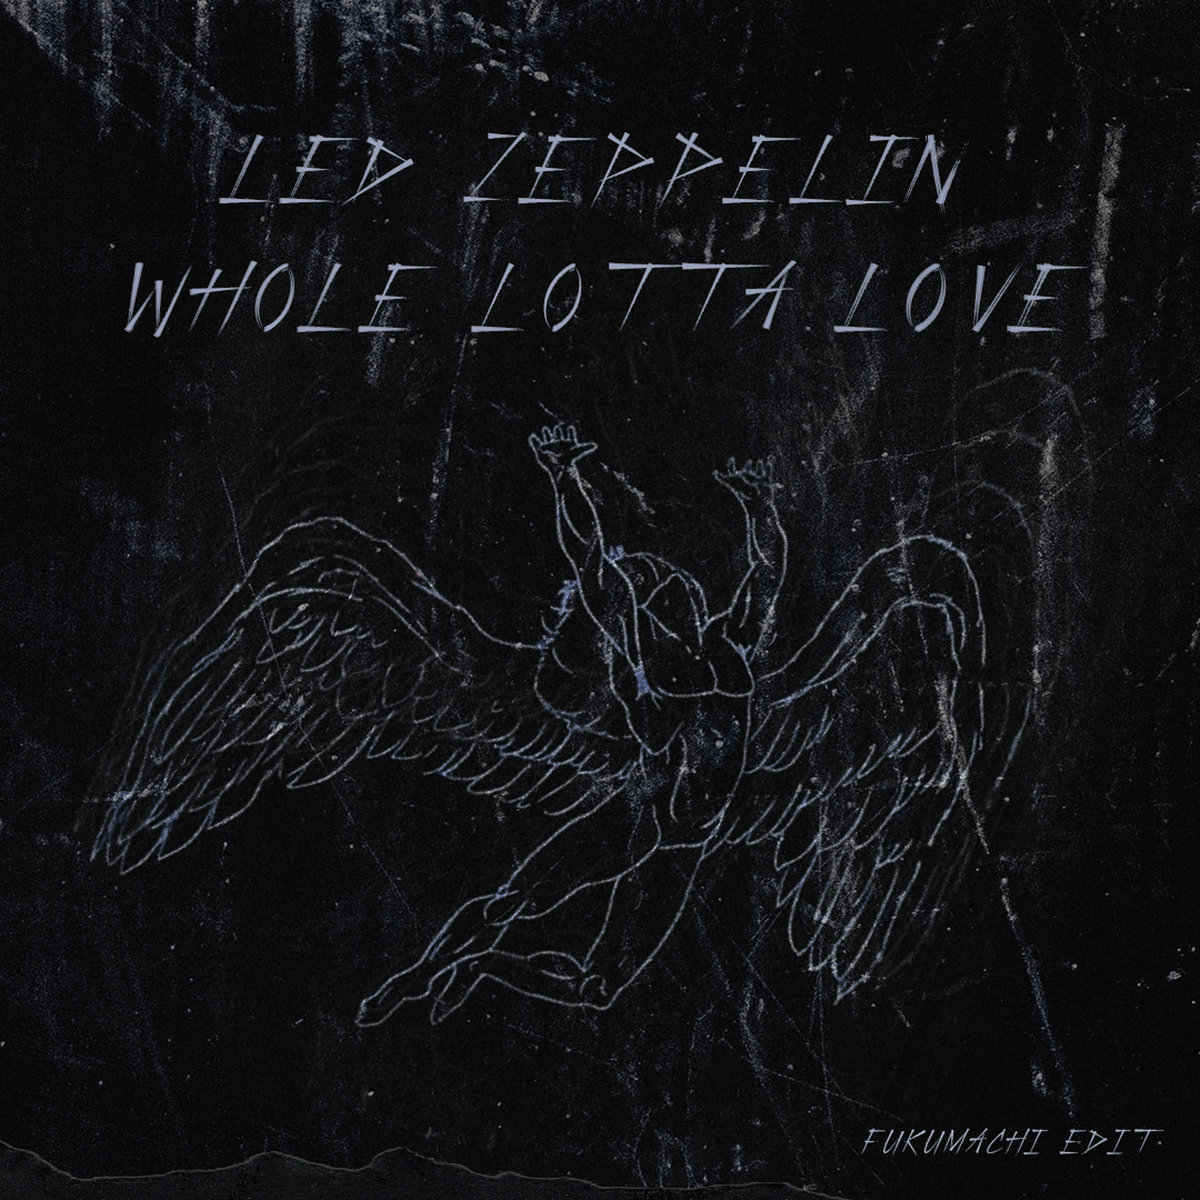 Led Zeppelin - Whole lotta love (Fukumachi Edit) | Fukumachi